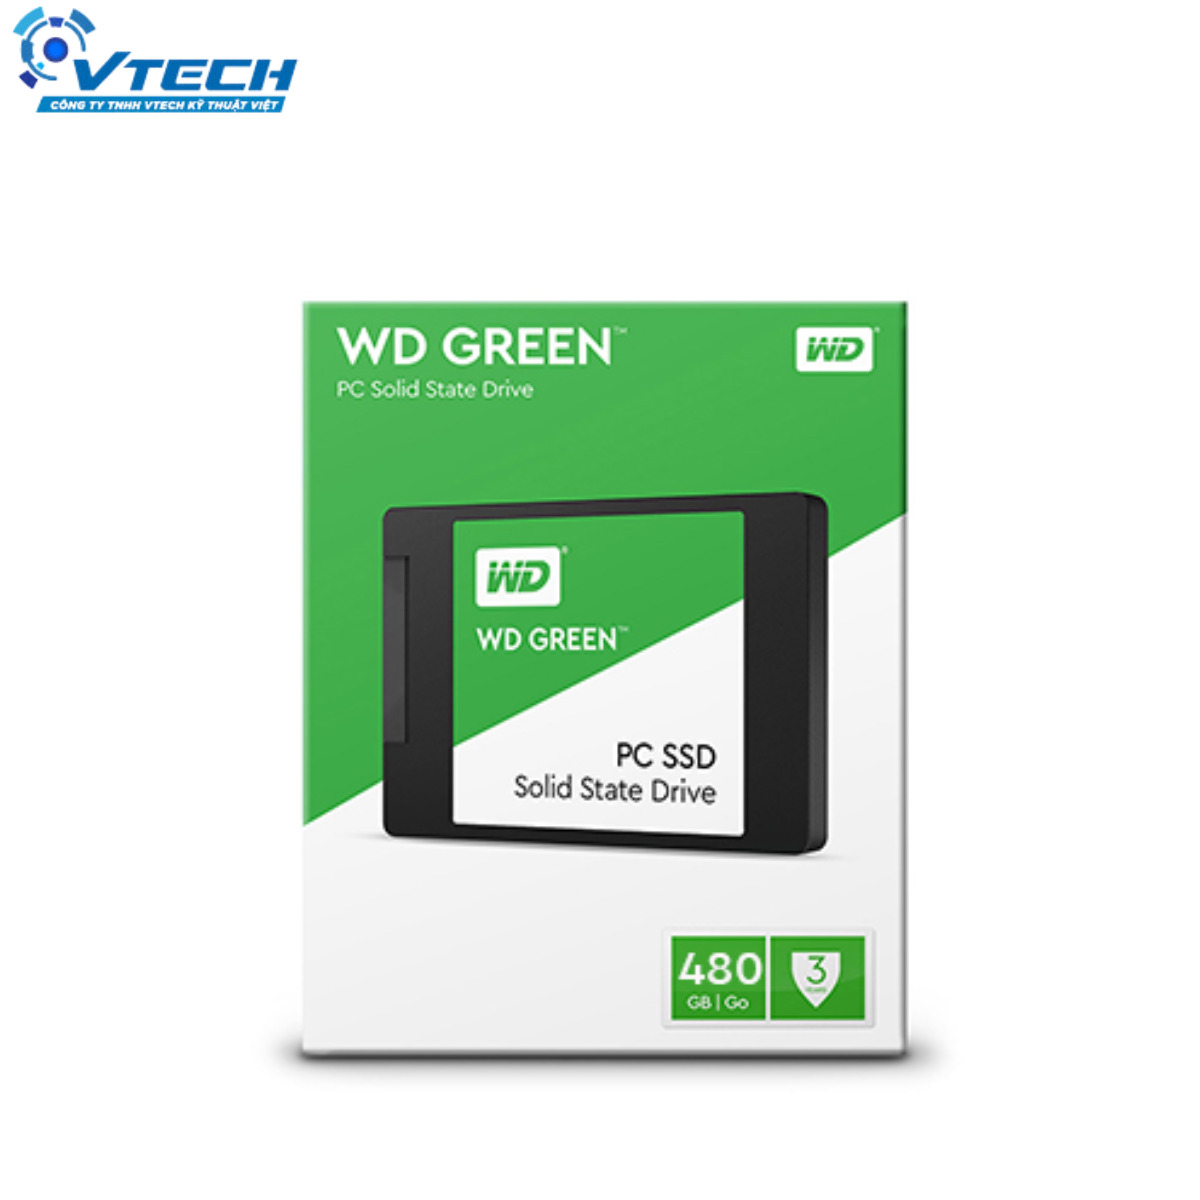 2953 - SSD Western Digital Green Sata III 480GB - Chính hãng - 6